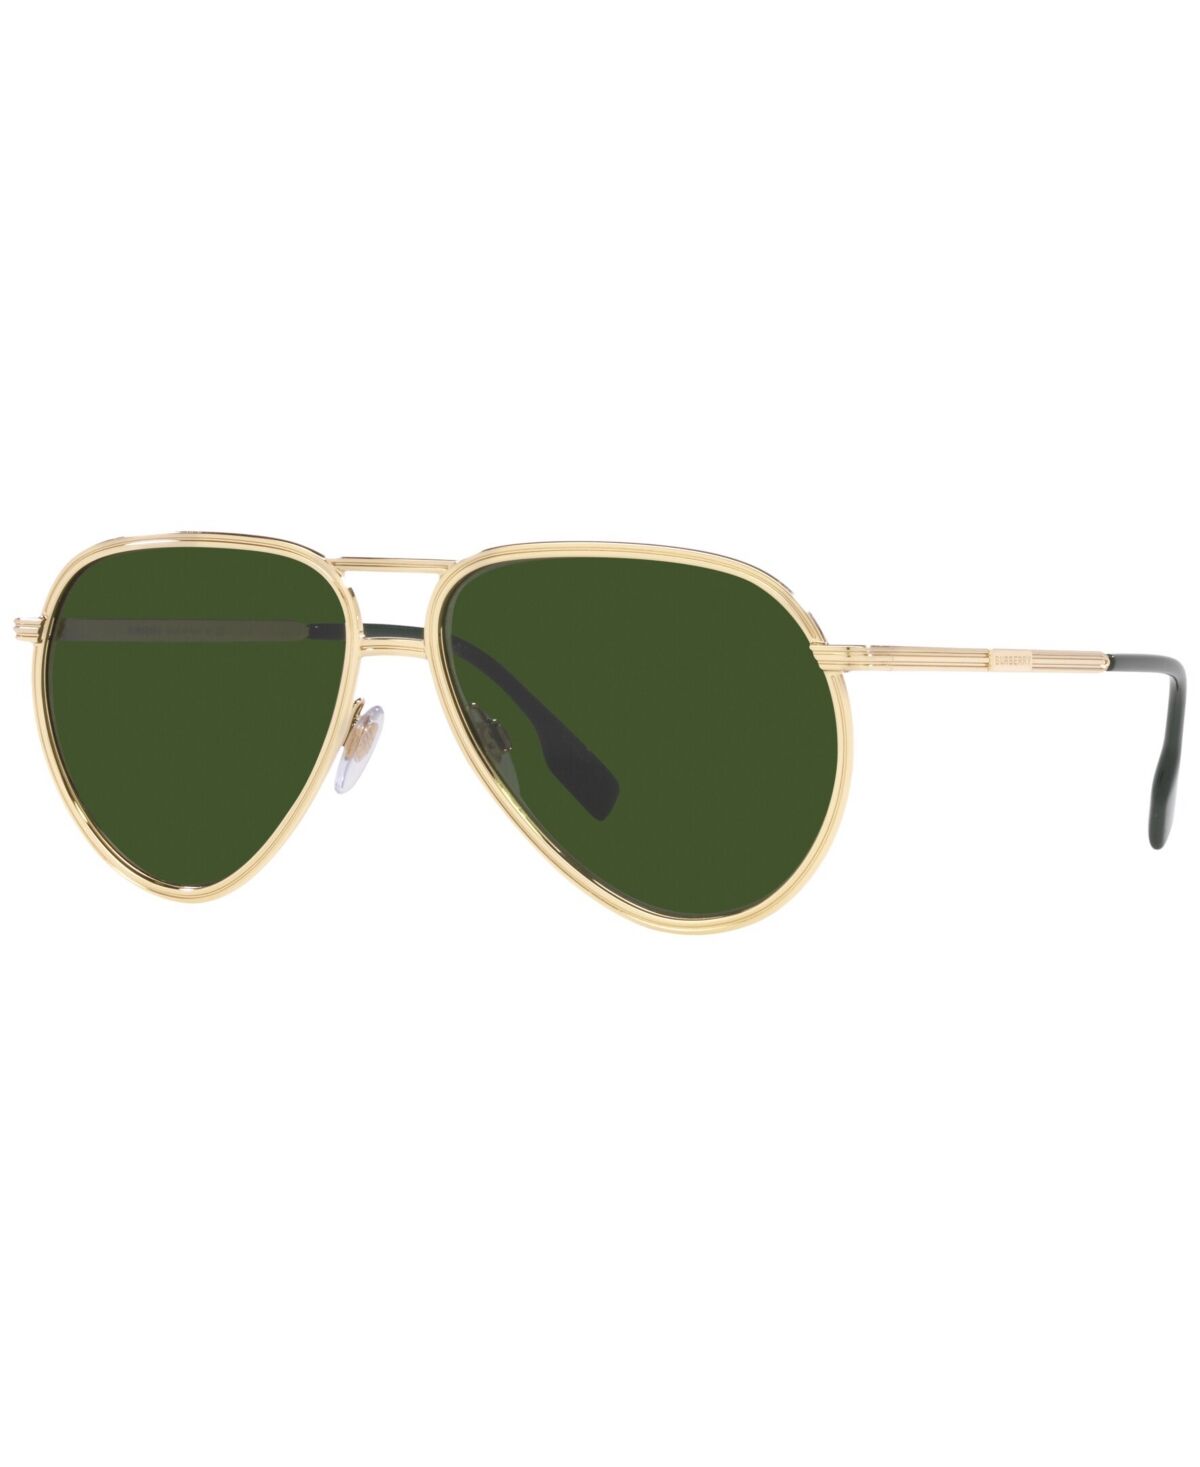 Burberry Men's Sunglasses, BE3135 Scott 59 - Light Gold-Tone